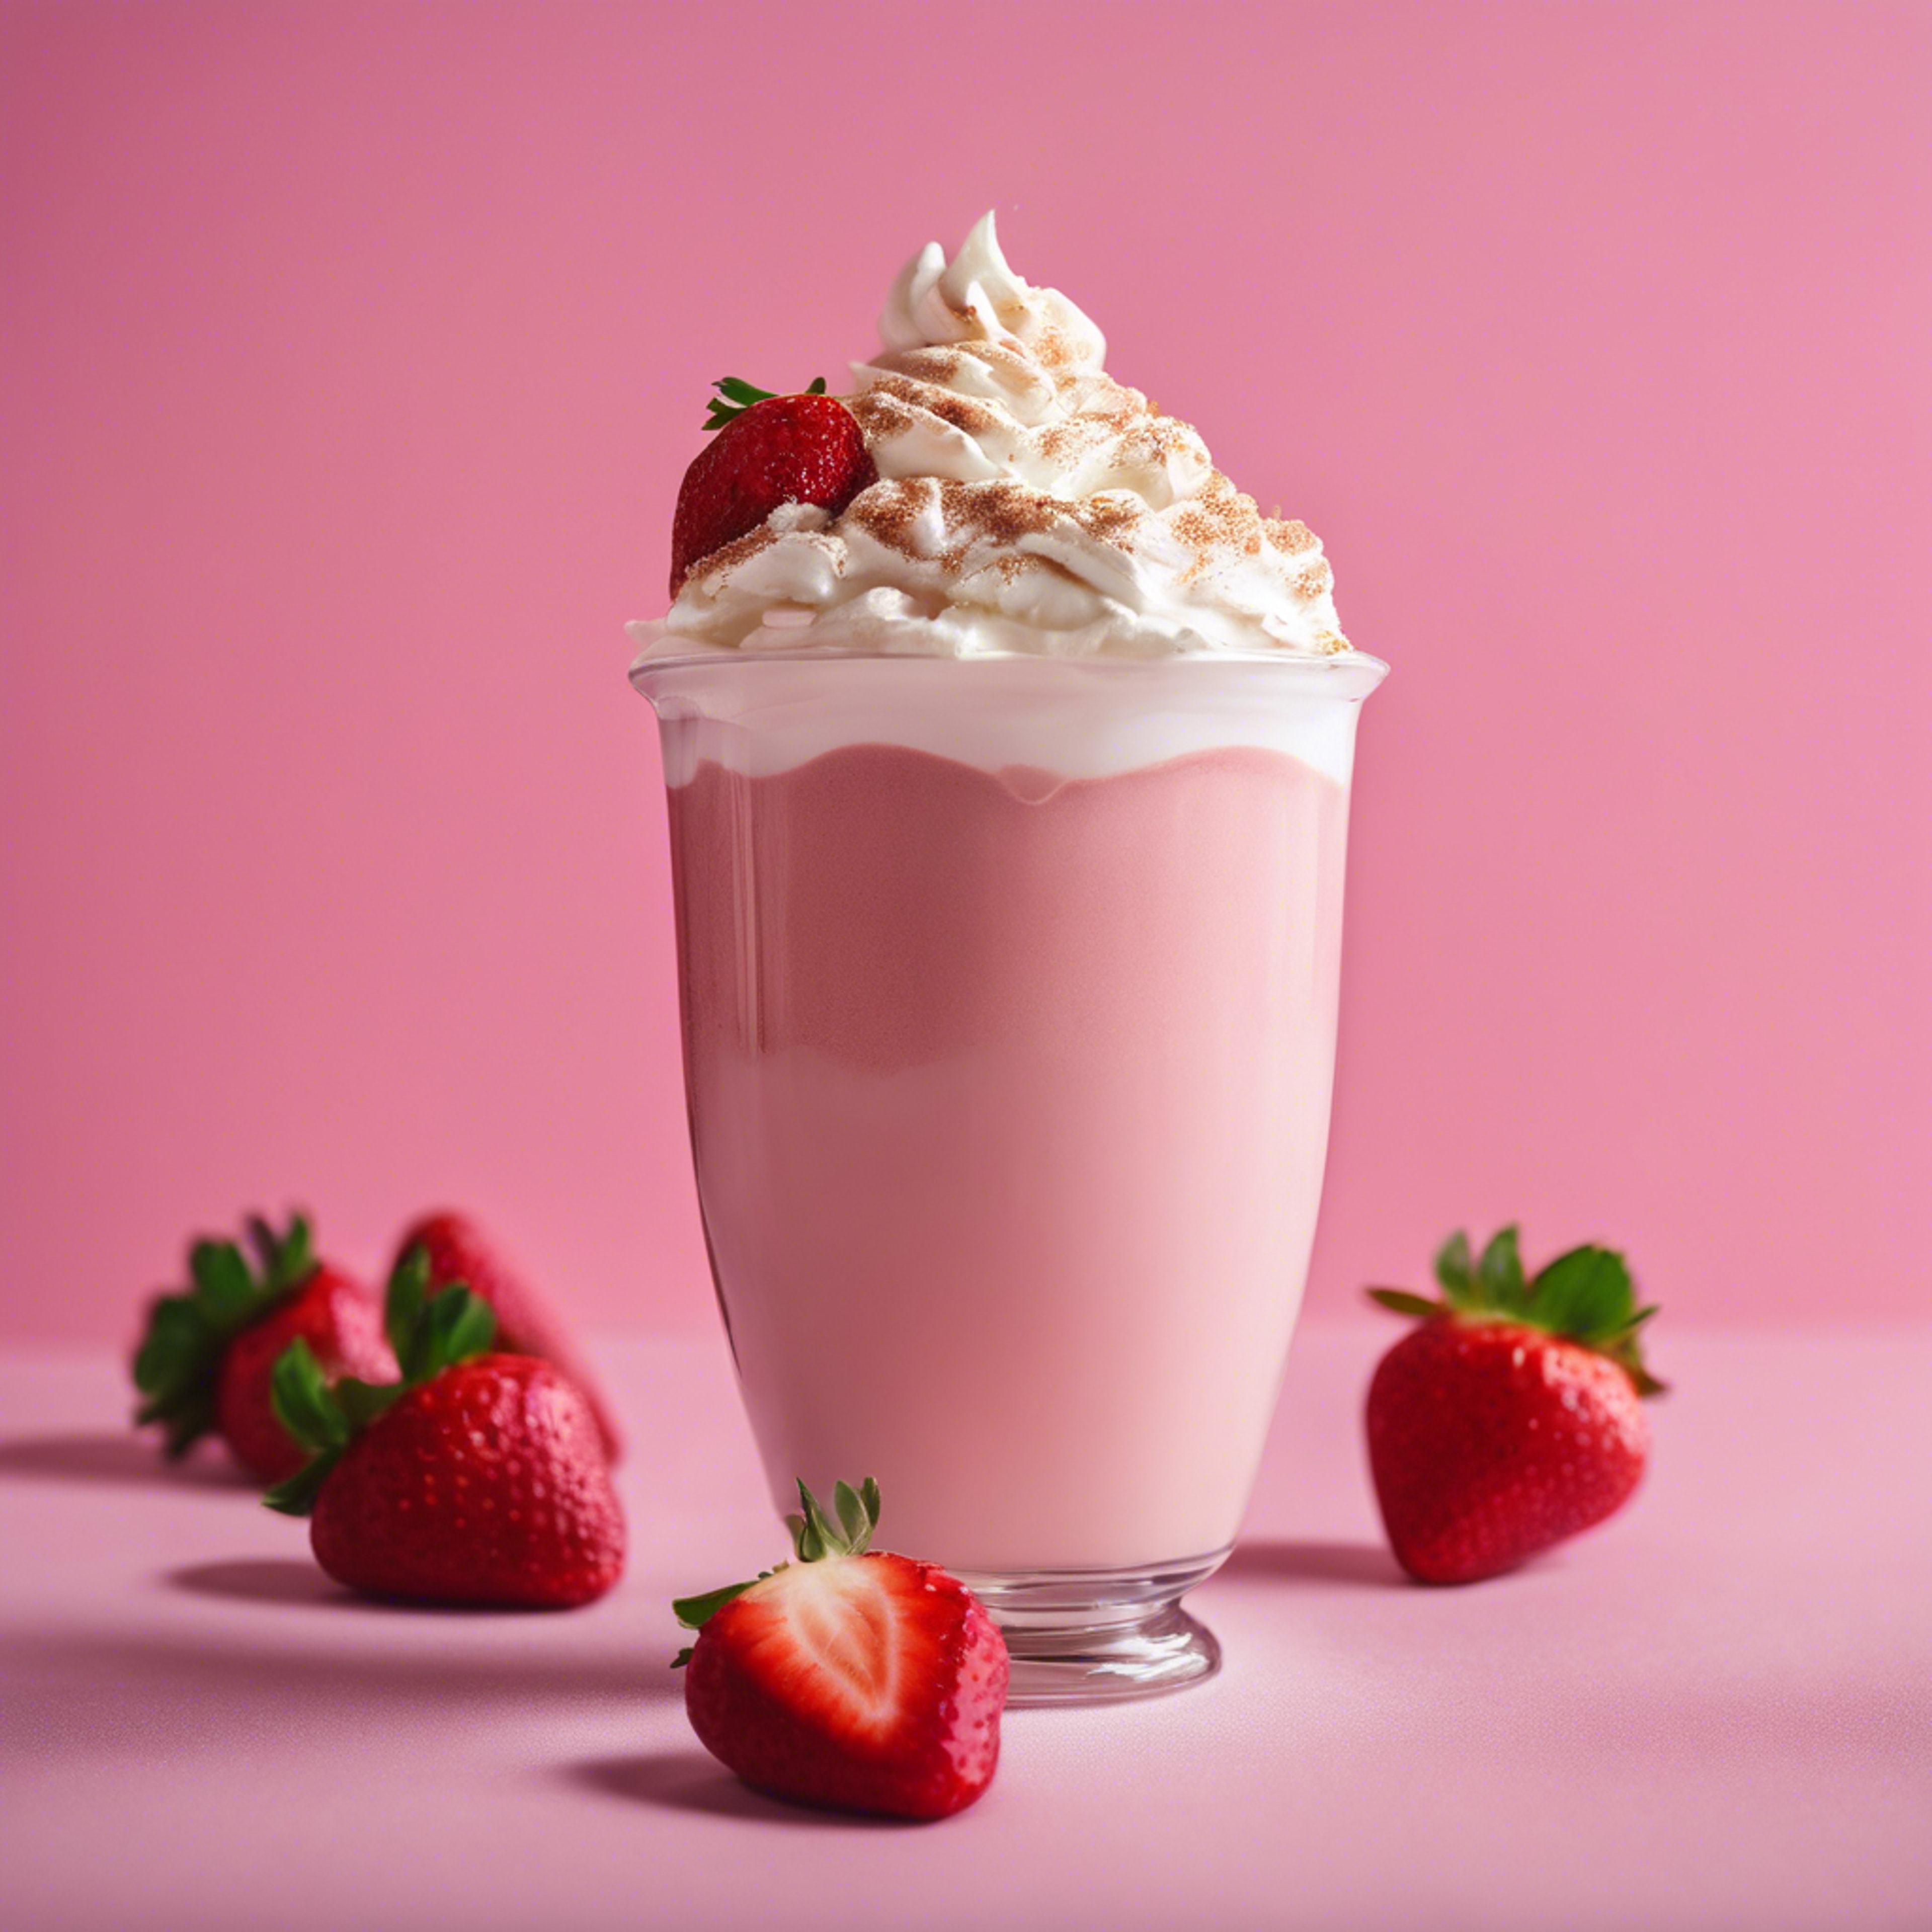 A freshly brewed strawberry latte with whipped cream against a pink backdrop. Divar kağızı[f1420ed34c924526b0ea]